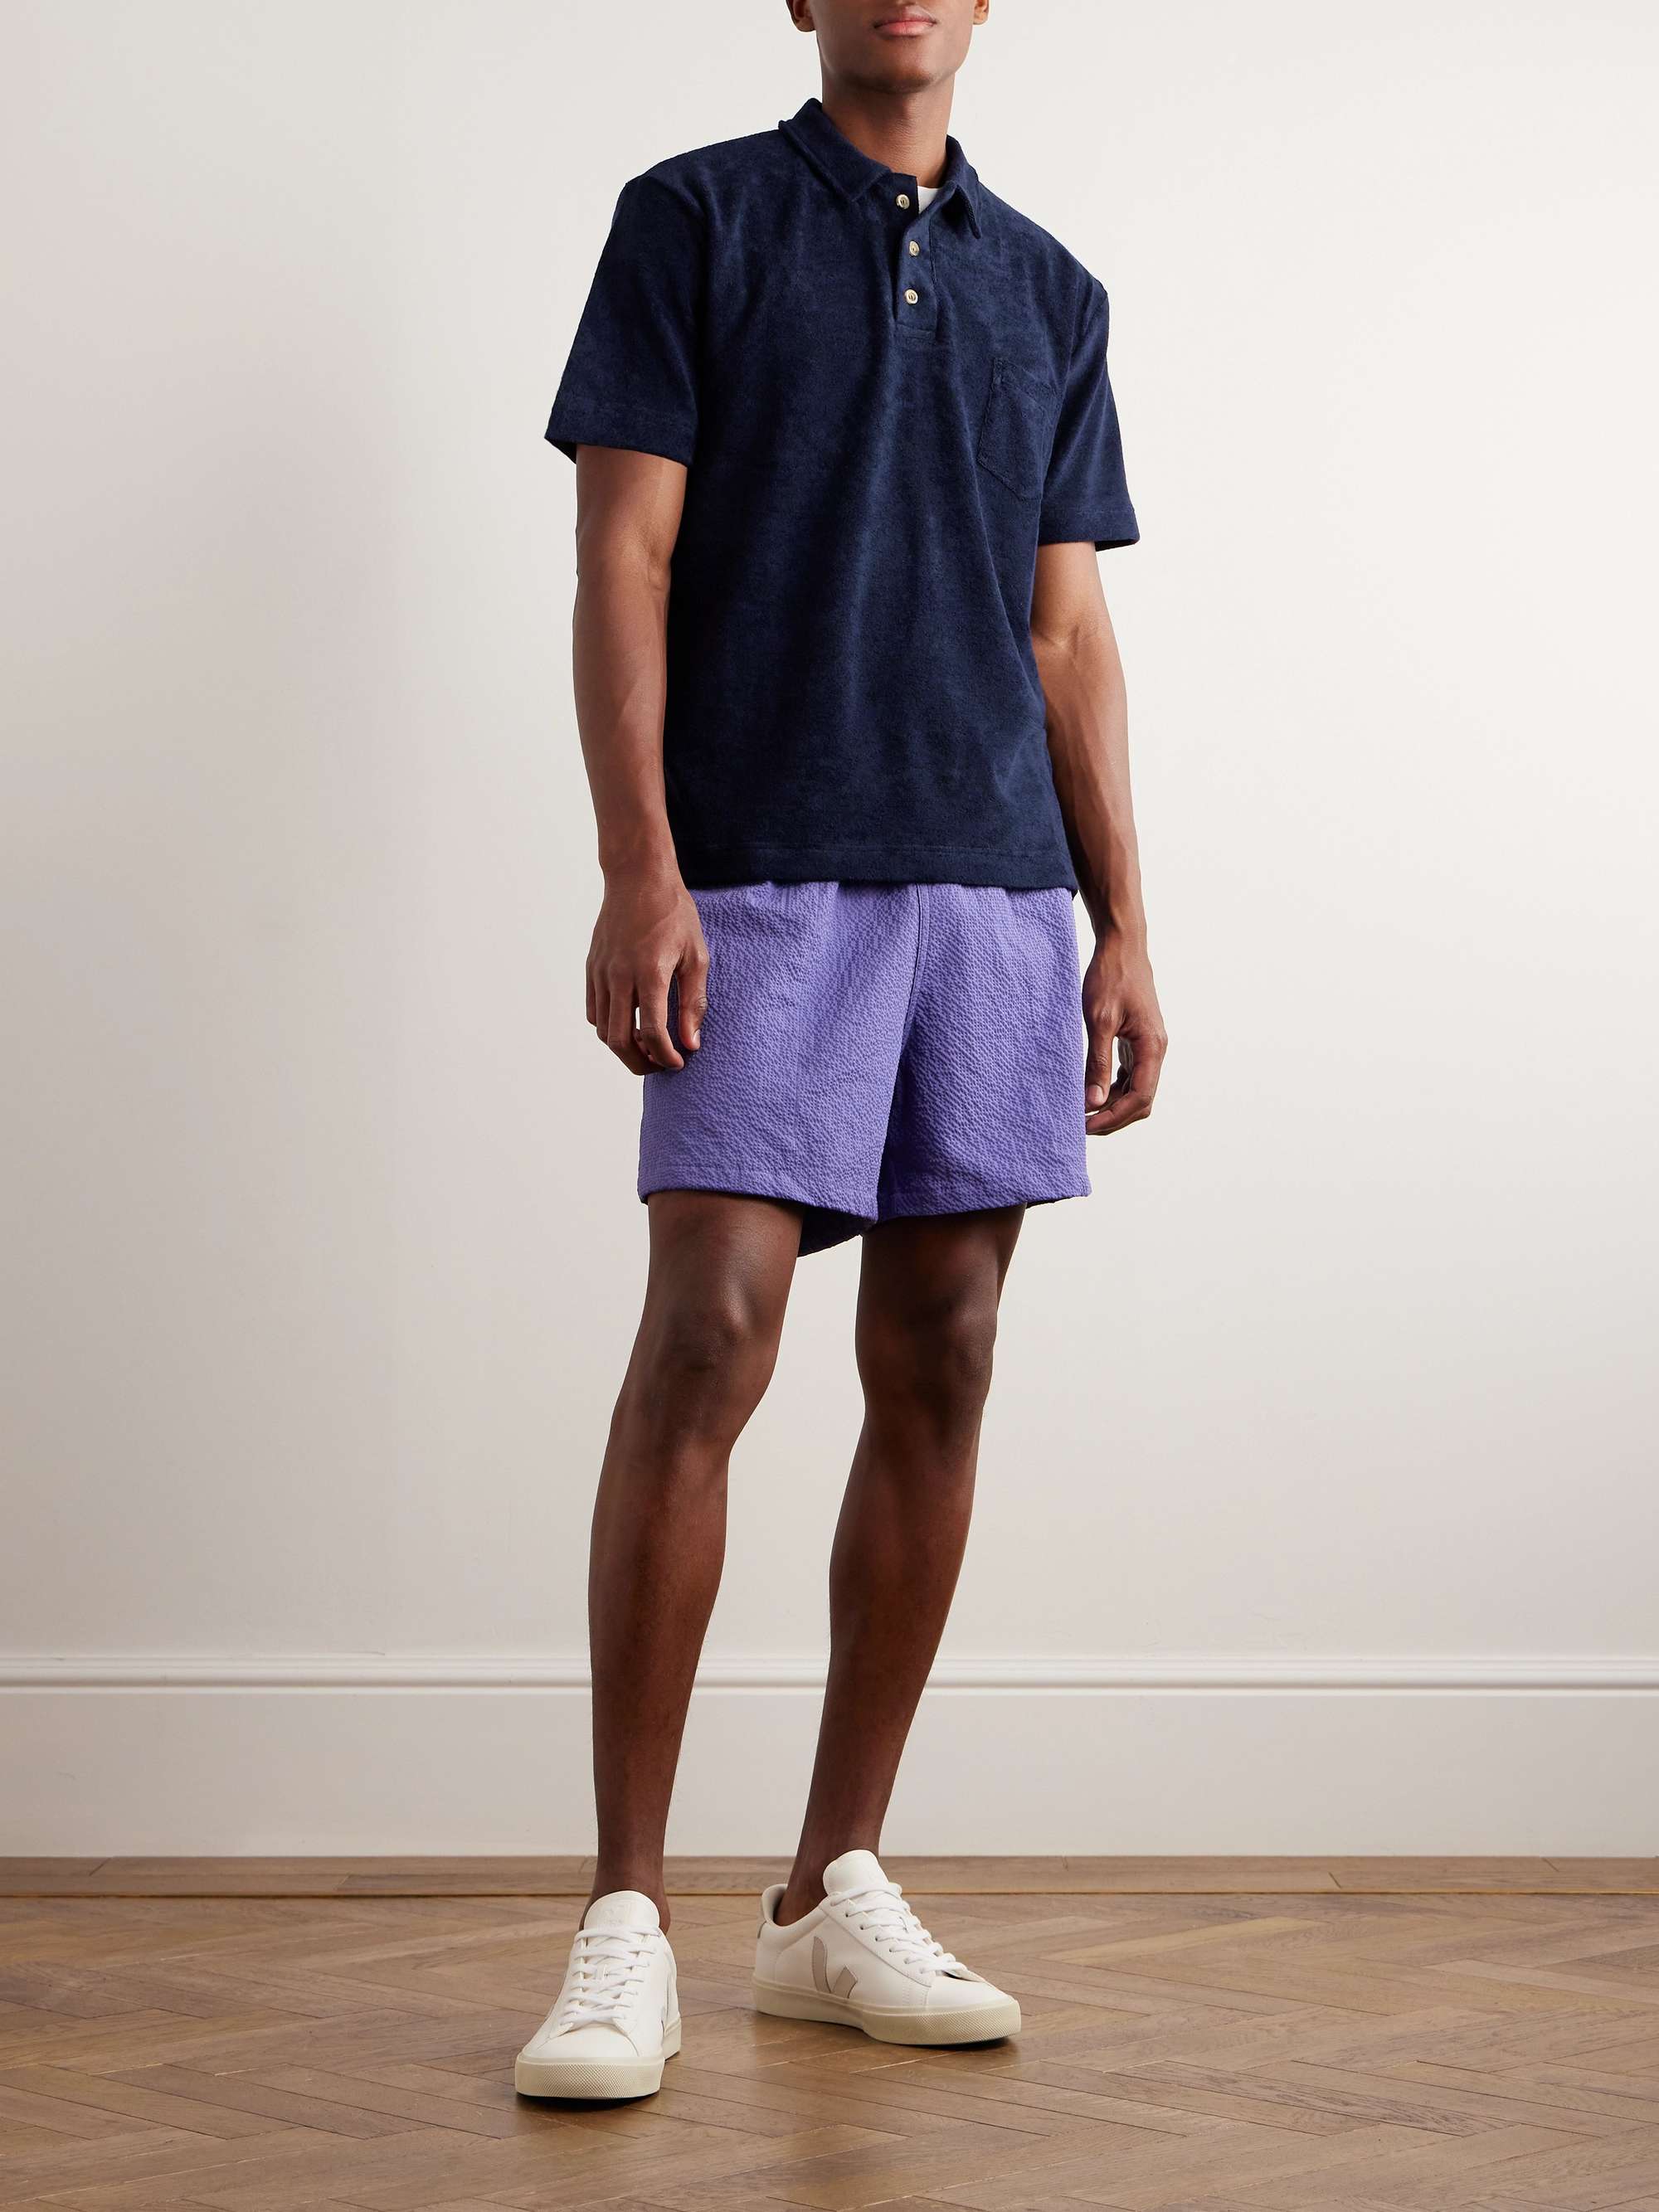 HOWLIN\' Mr Fantasy MR Terry Men PORTER for Polo Shirt Cotton-Blend 